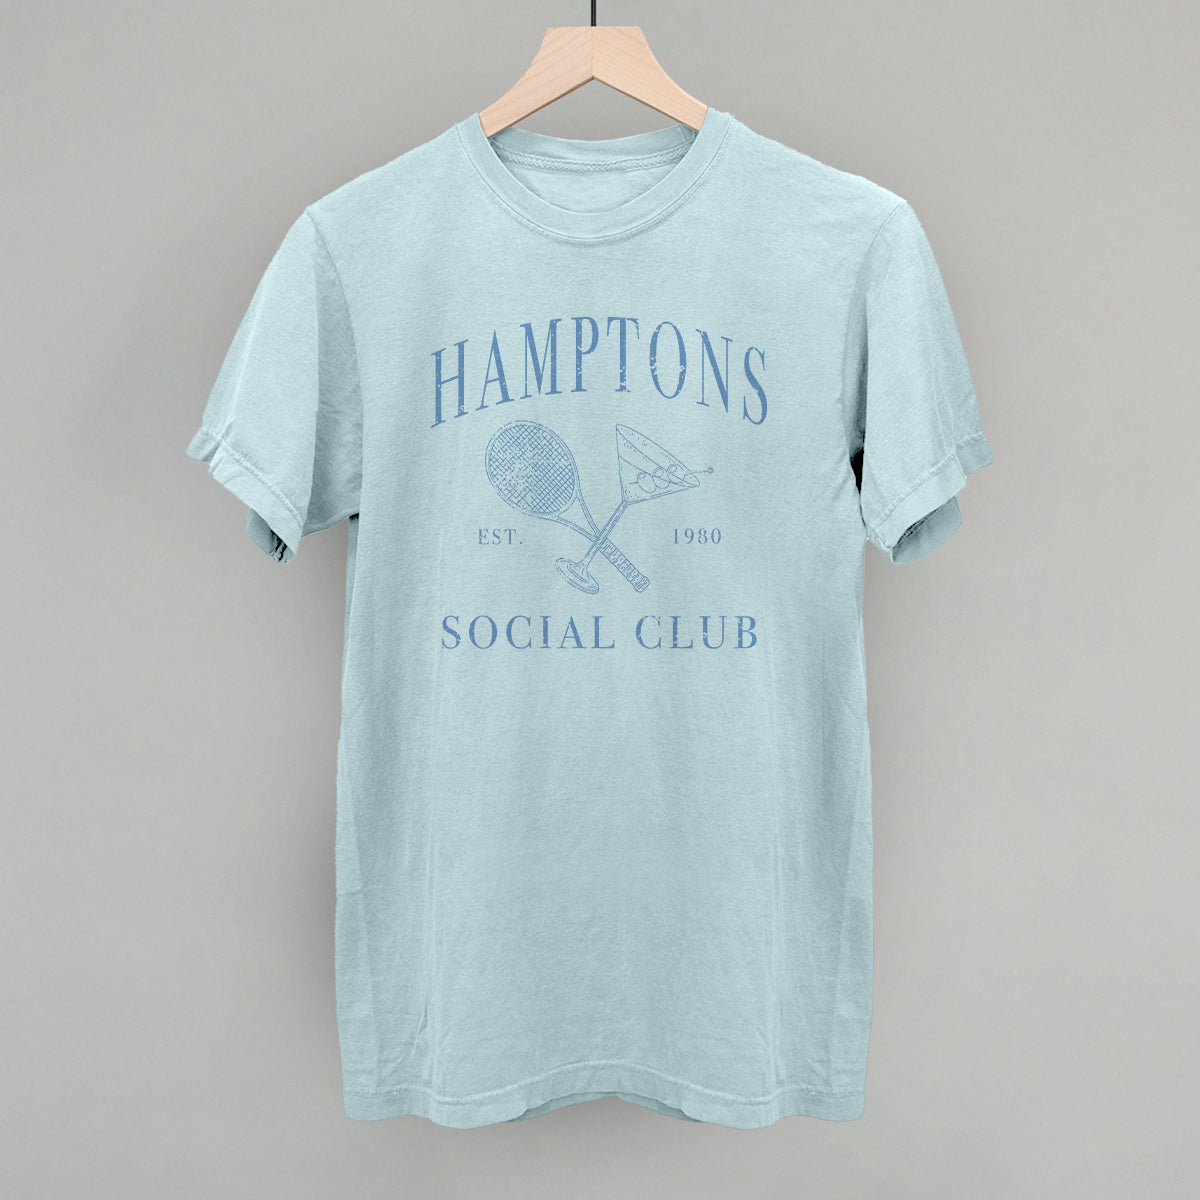 Hamptons Social Club